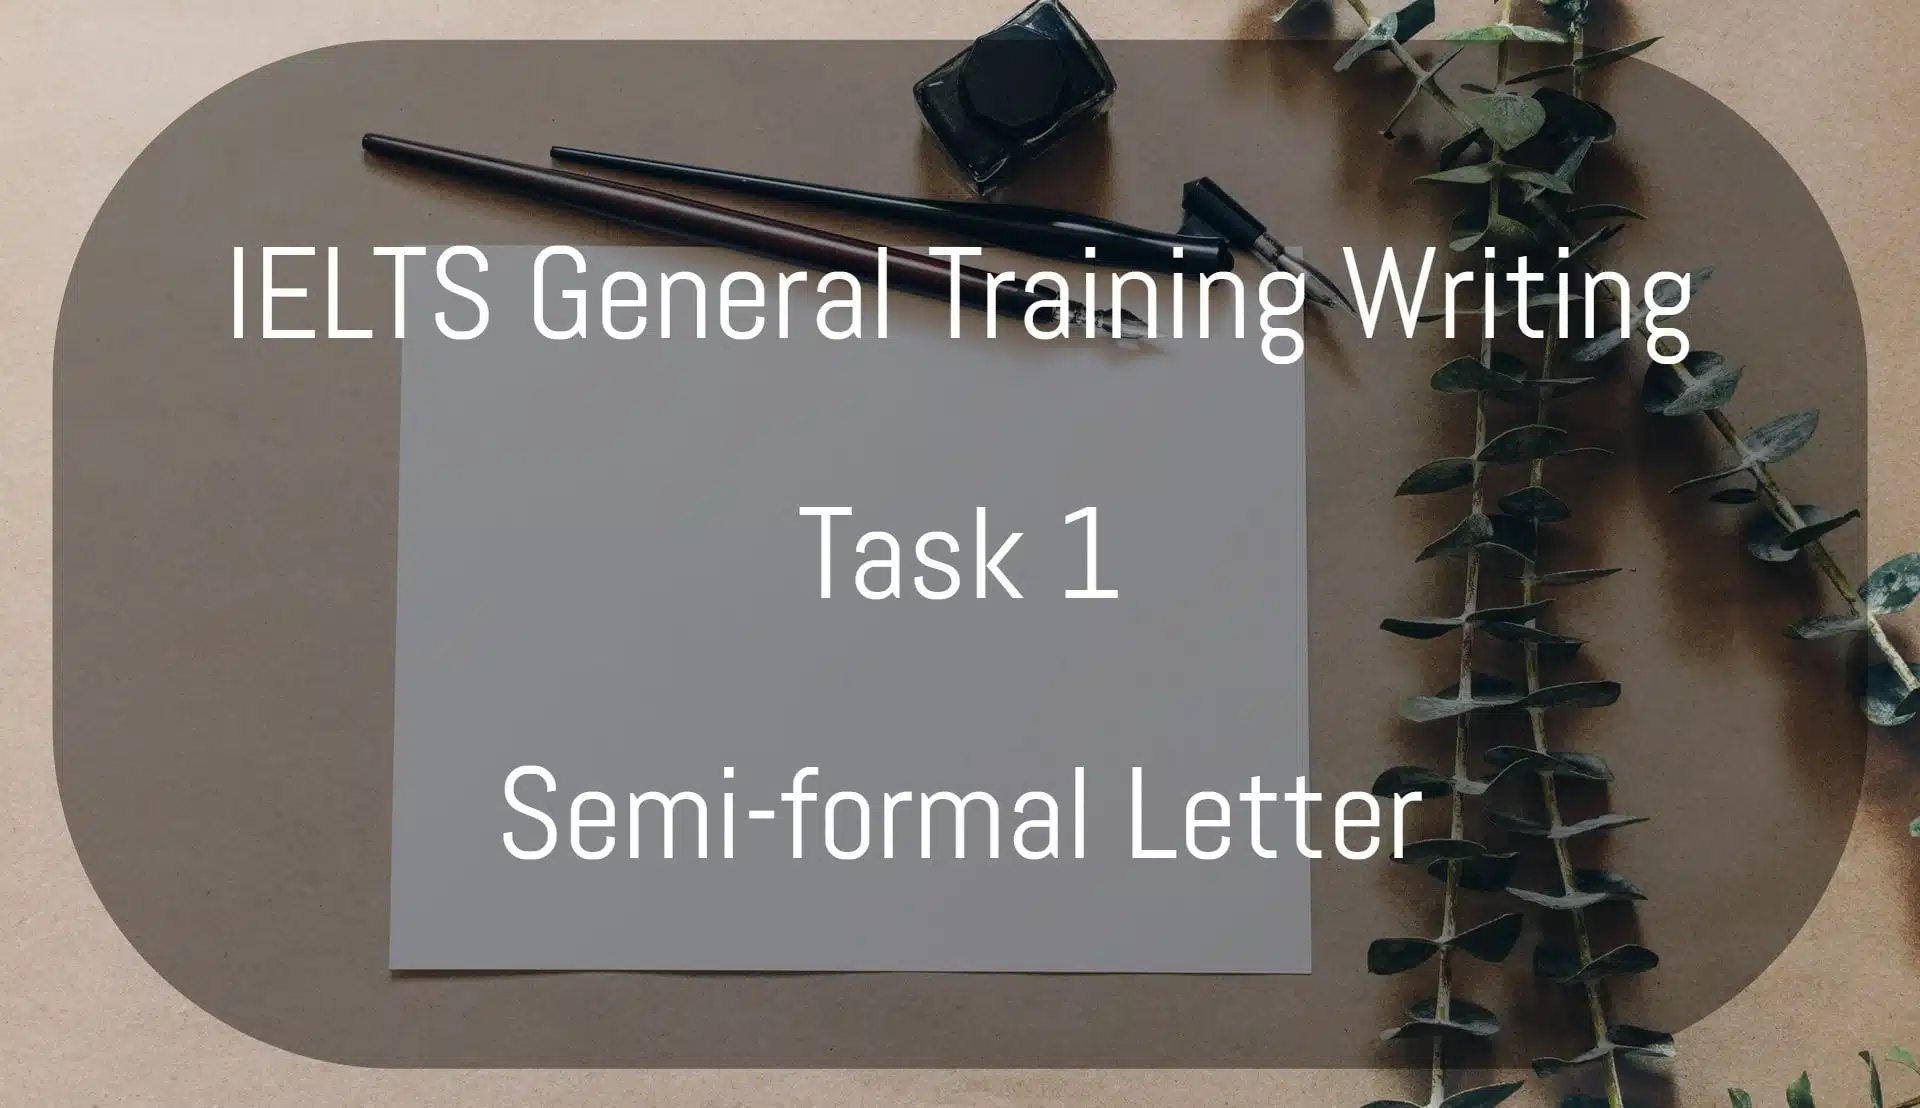 IELTS general training writing task 1 semi-formal letter